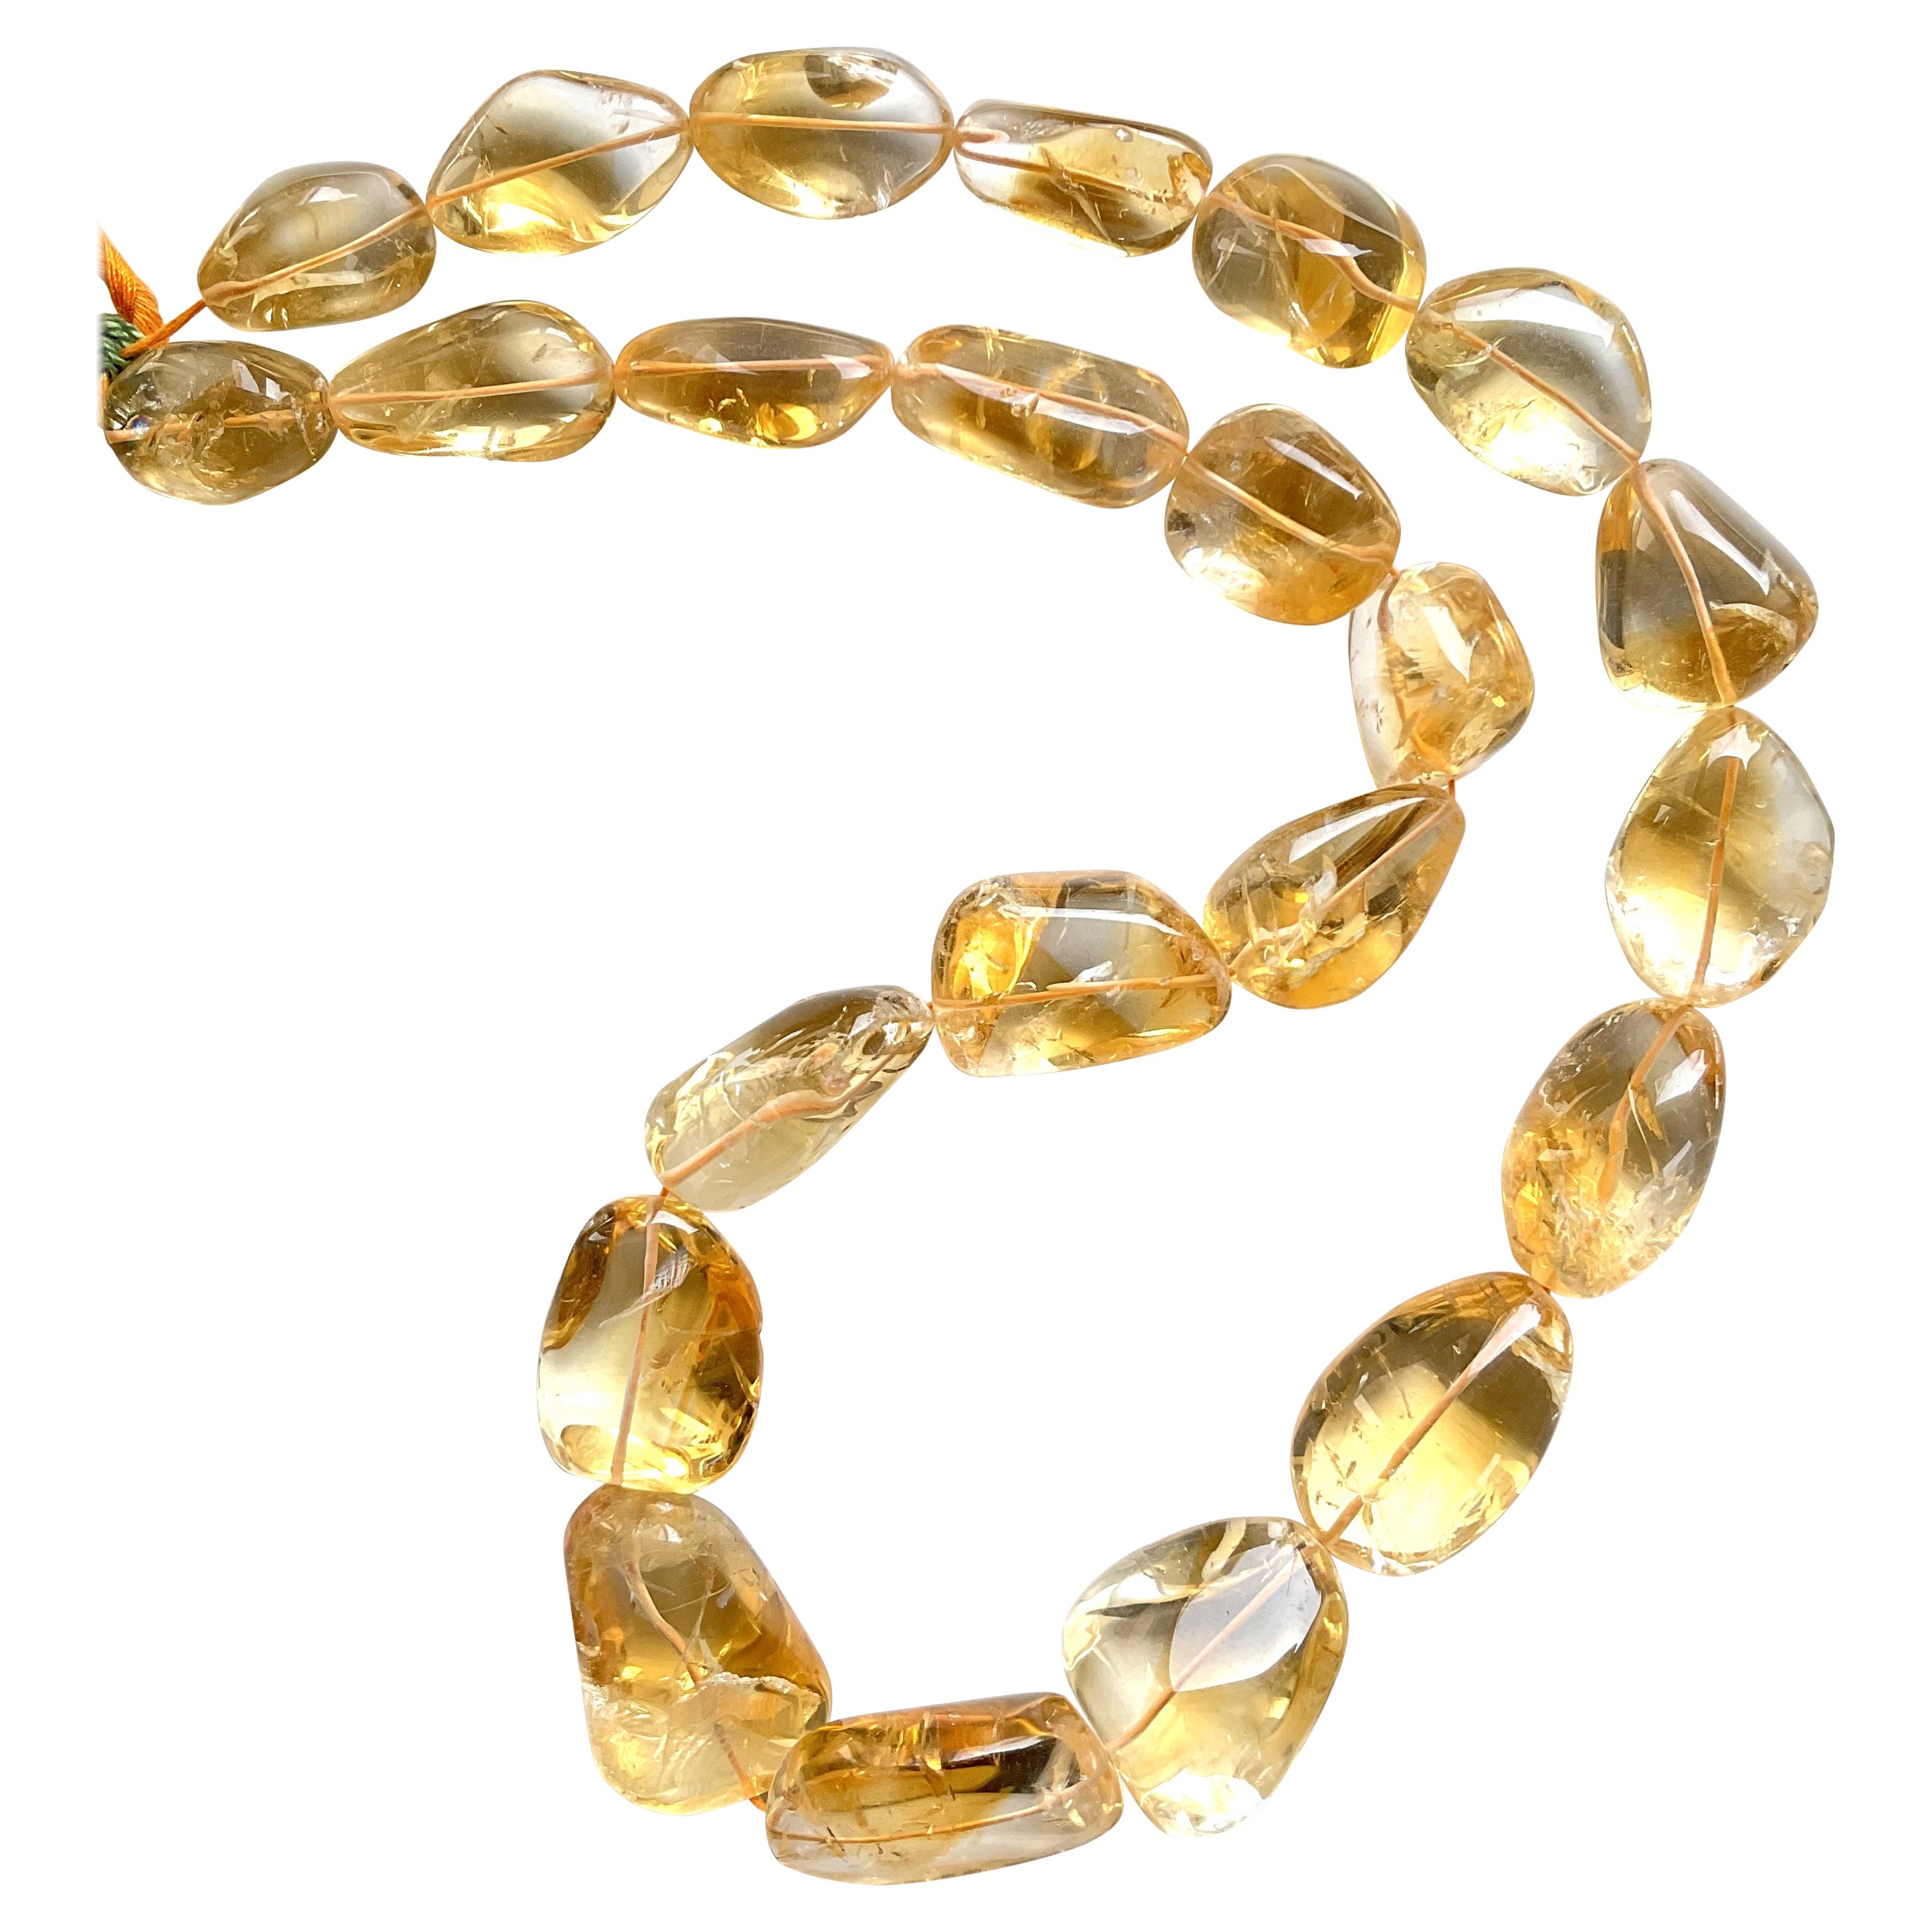 1157.00 carats big size citrine plain tumbled natural gemstone necklace